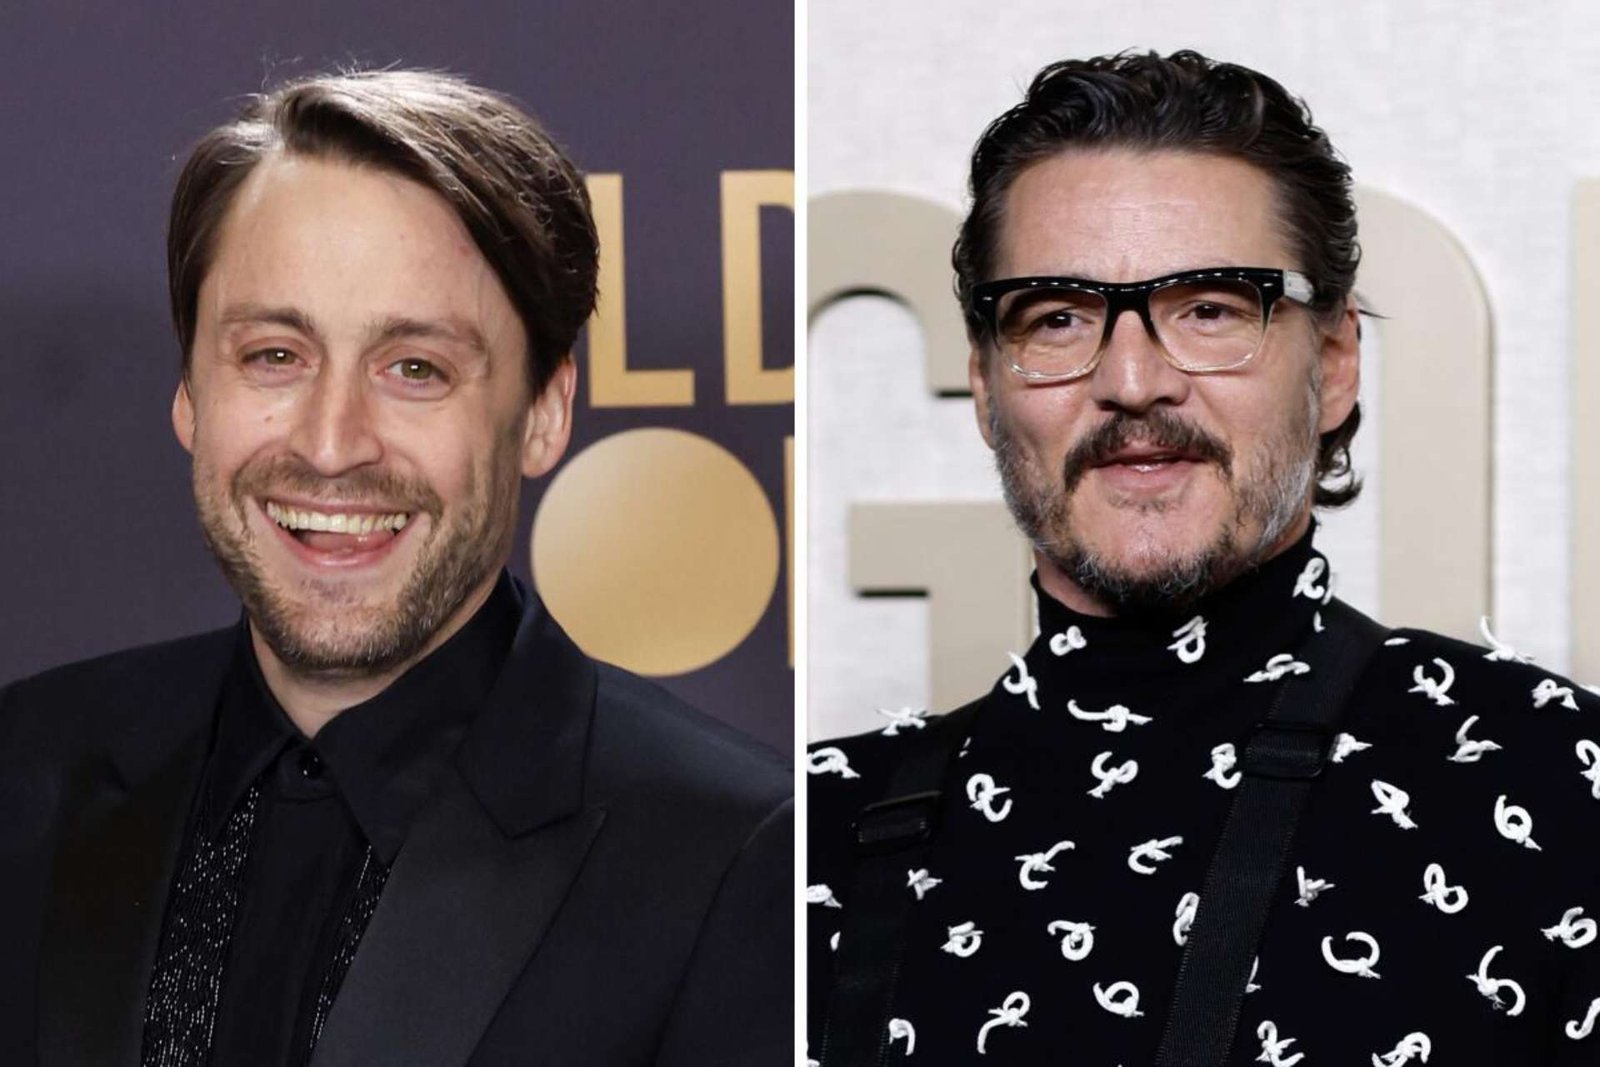 Pedro Pascal and Kieran Culkin's Playful Banter Steals the Spotlight at Golden Globes